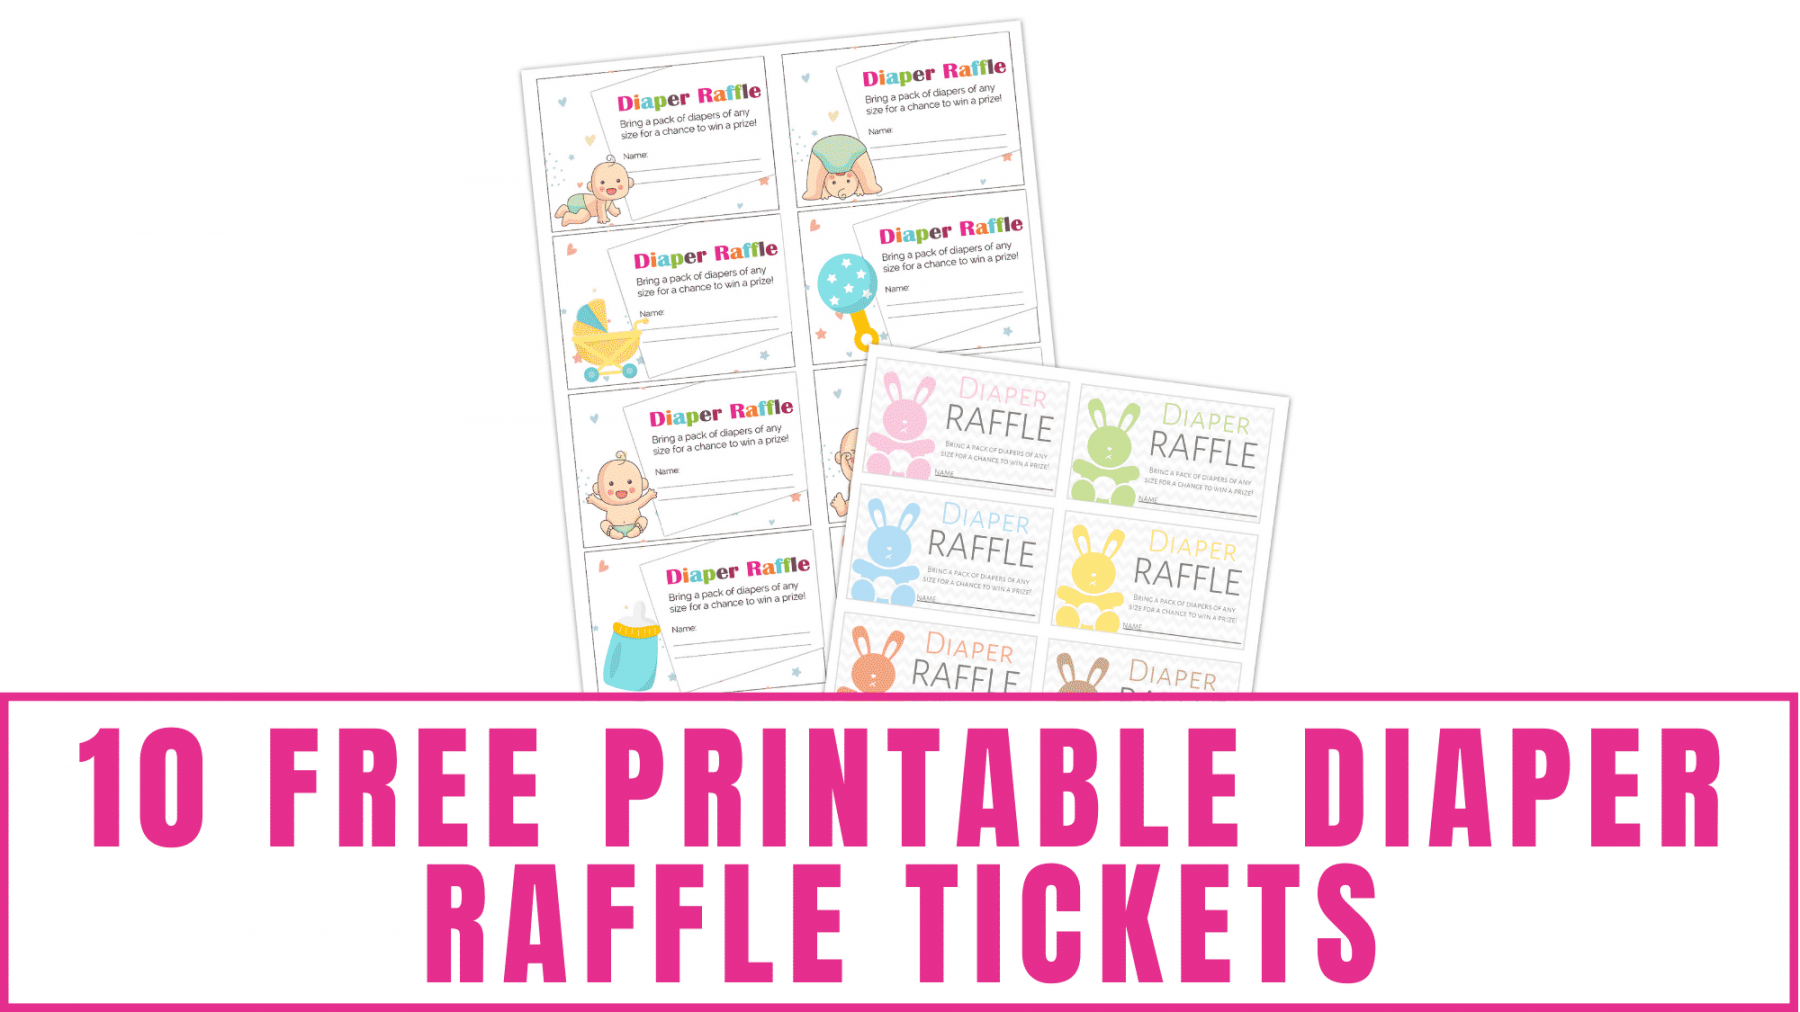 Free Printable Diaper Raffle Tickets - Freebie Finding Mom - FREE Printables - Free Printable Diaper Raffle Tickets